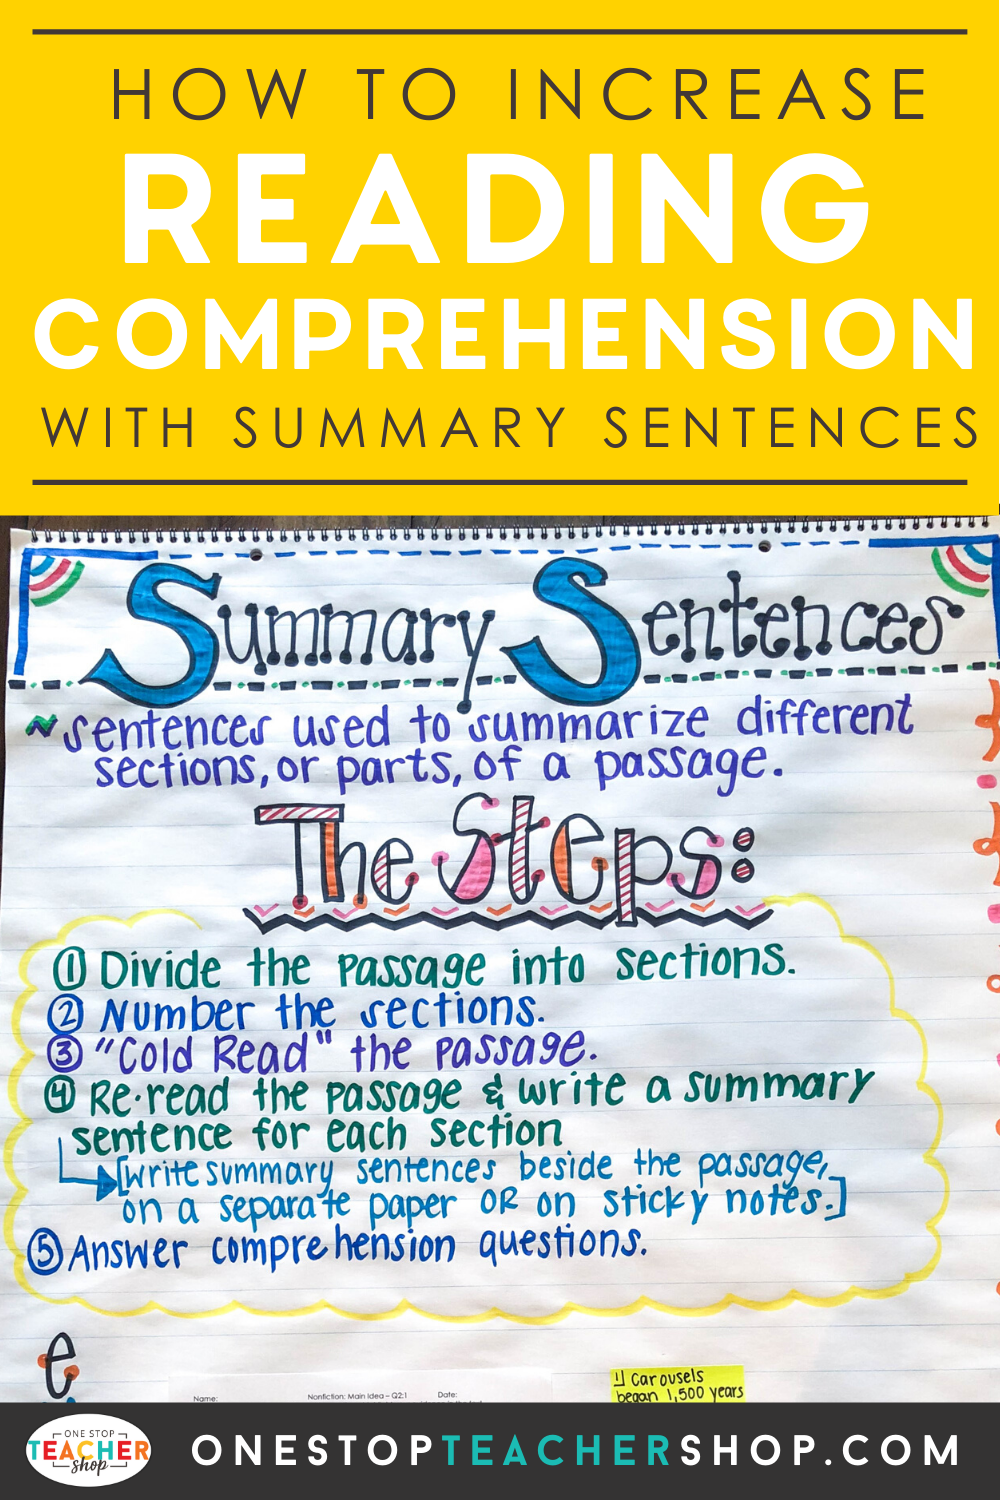 summarize sentence